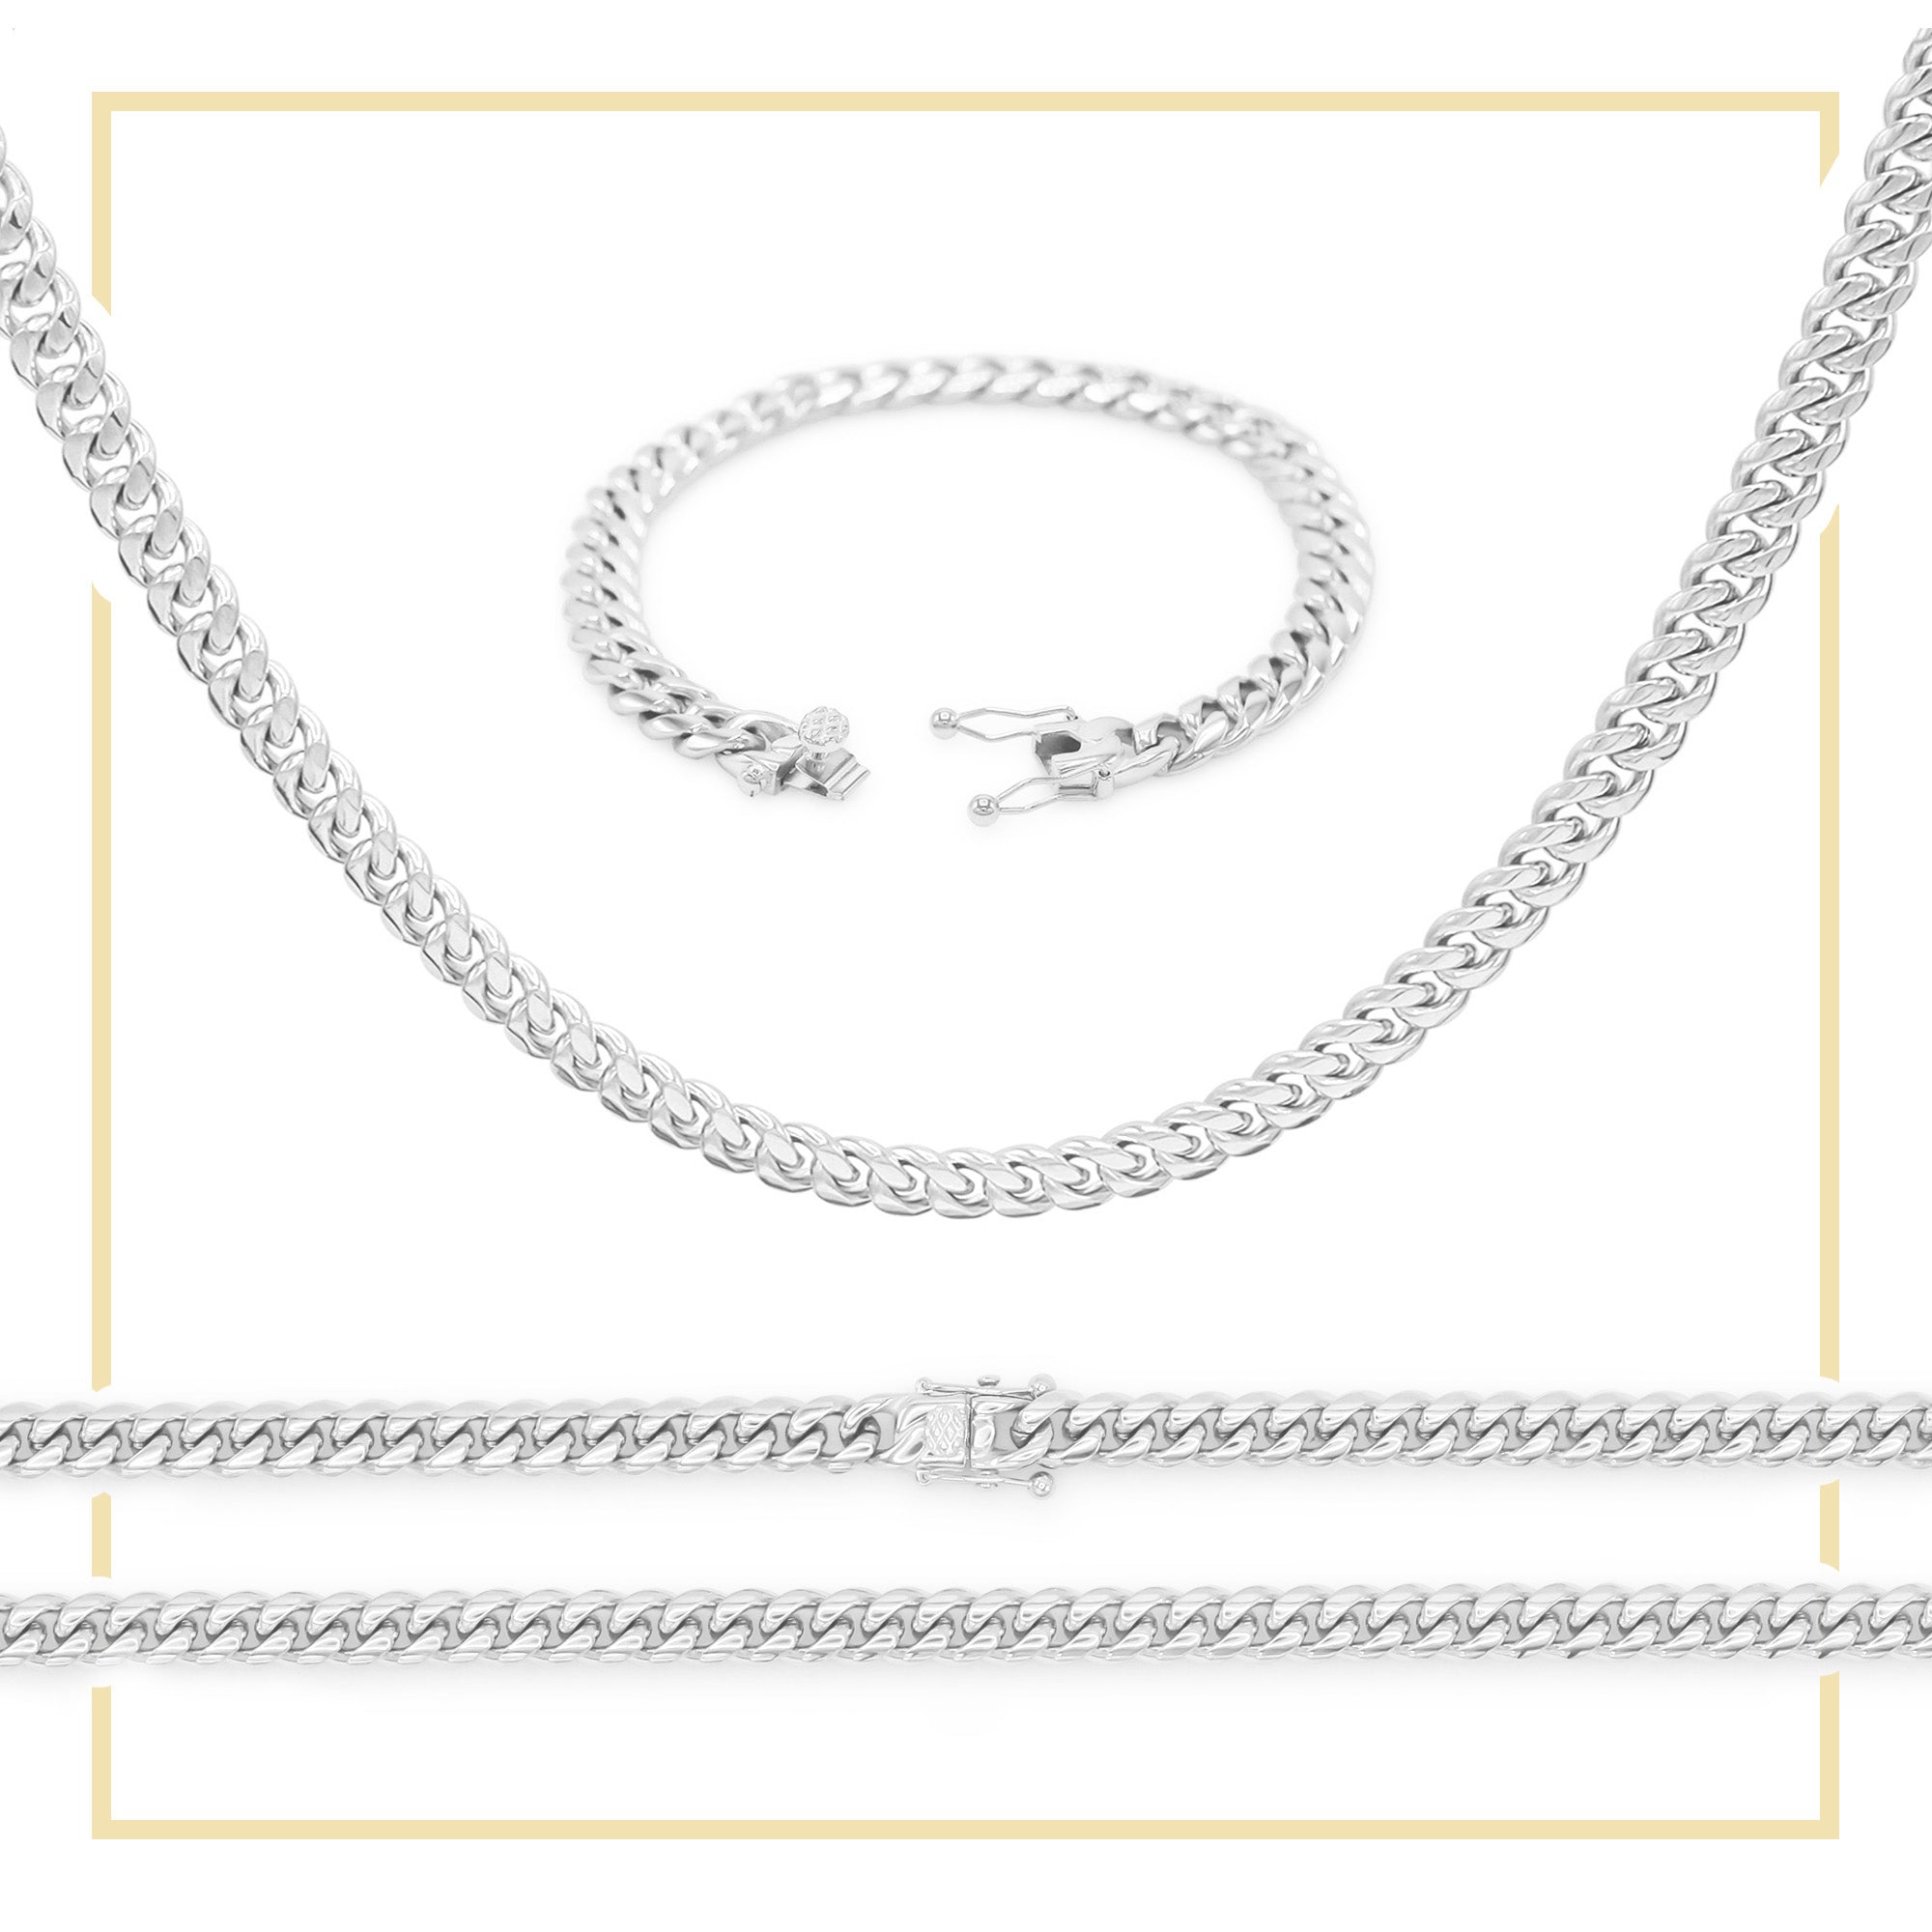 Silver Cuban Link Chain Necklace 30" Bracelet 8.5" Stainless Steel Set For Men